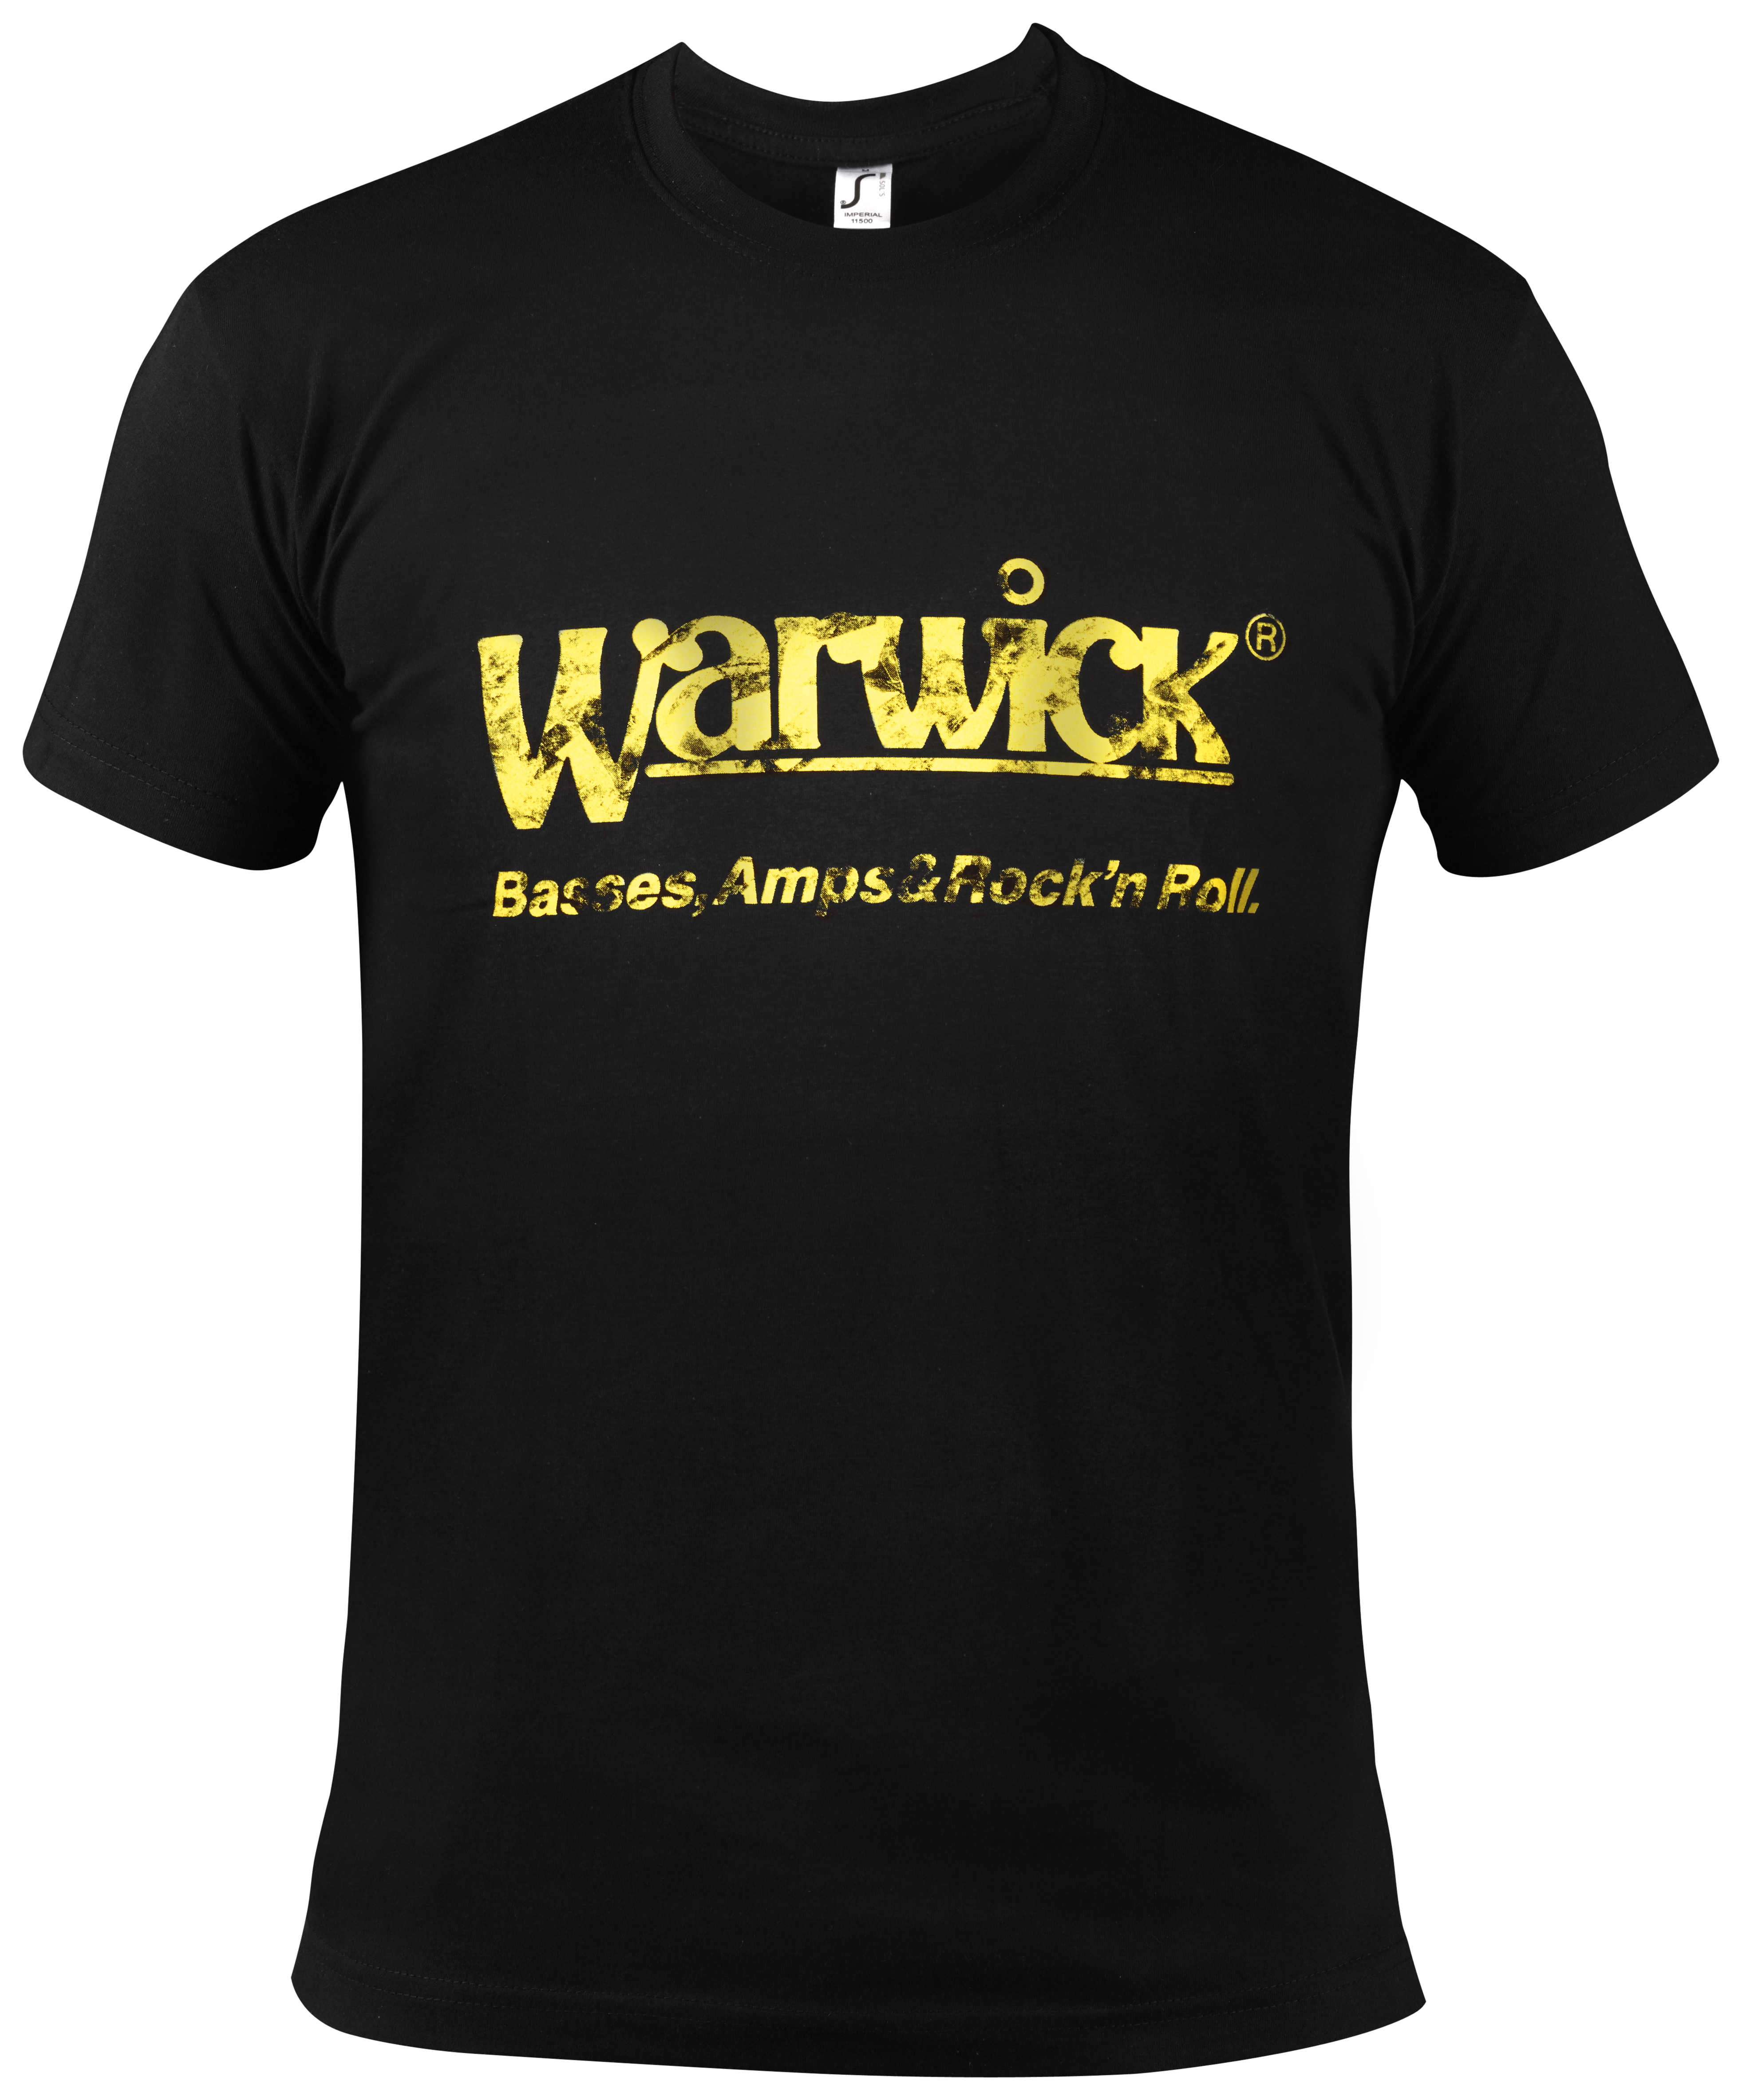 Warwick Promo - Basses, Amps & Rock'n'Roll, Woman - Size XL